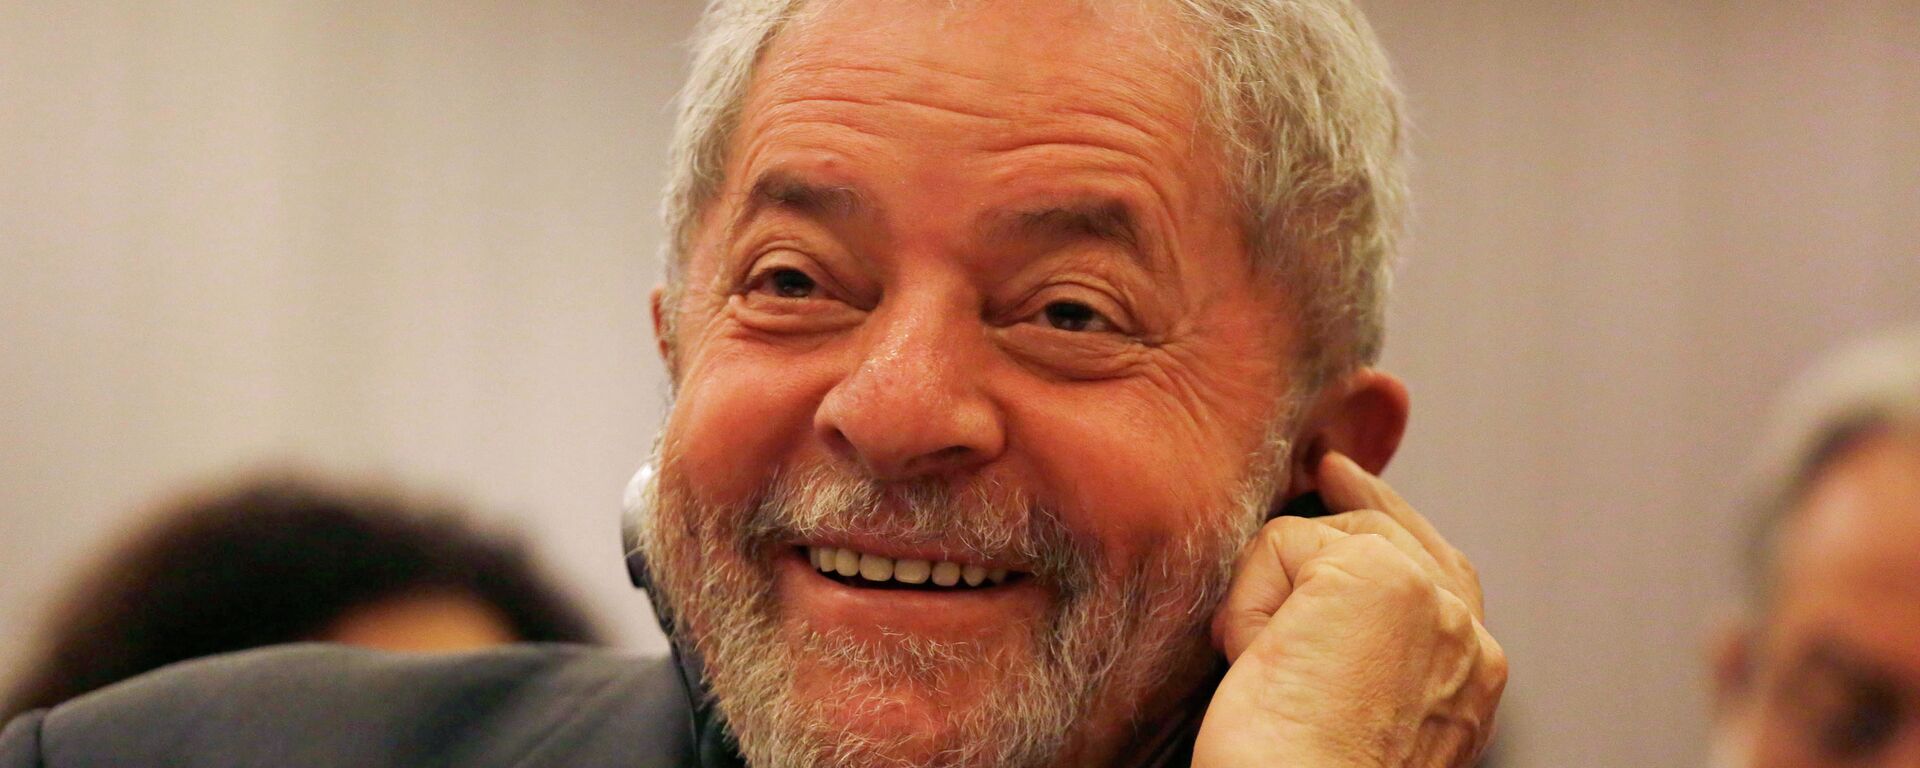 El expresidente de Brasil,  Lula da Silva - Sputnik Mundo, 1920, 16.04.2021